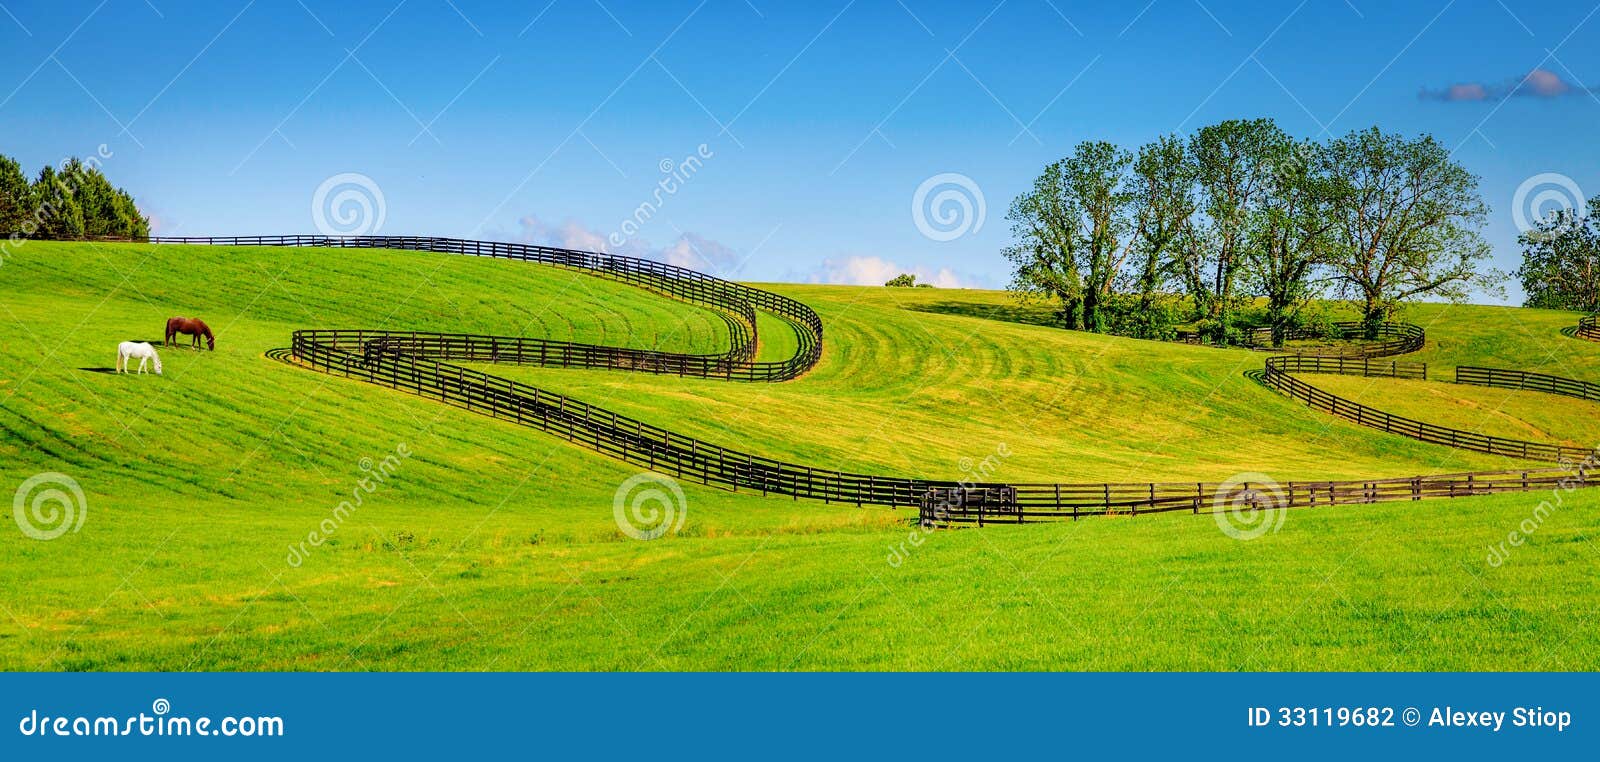 horse farm fences